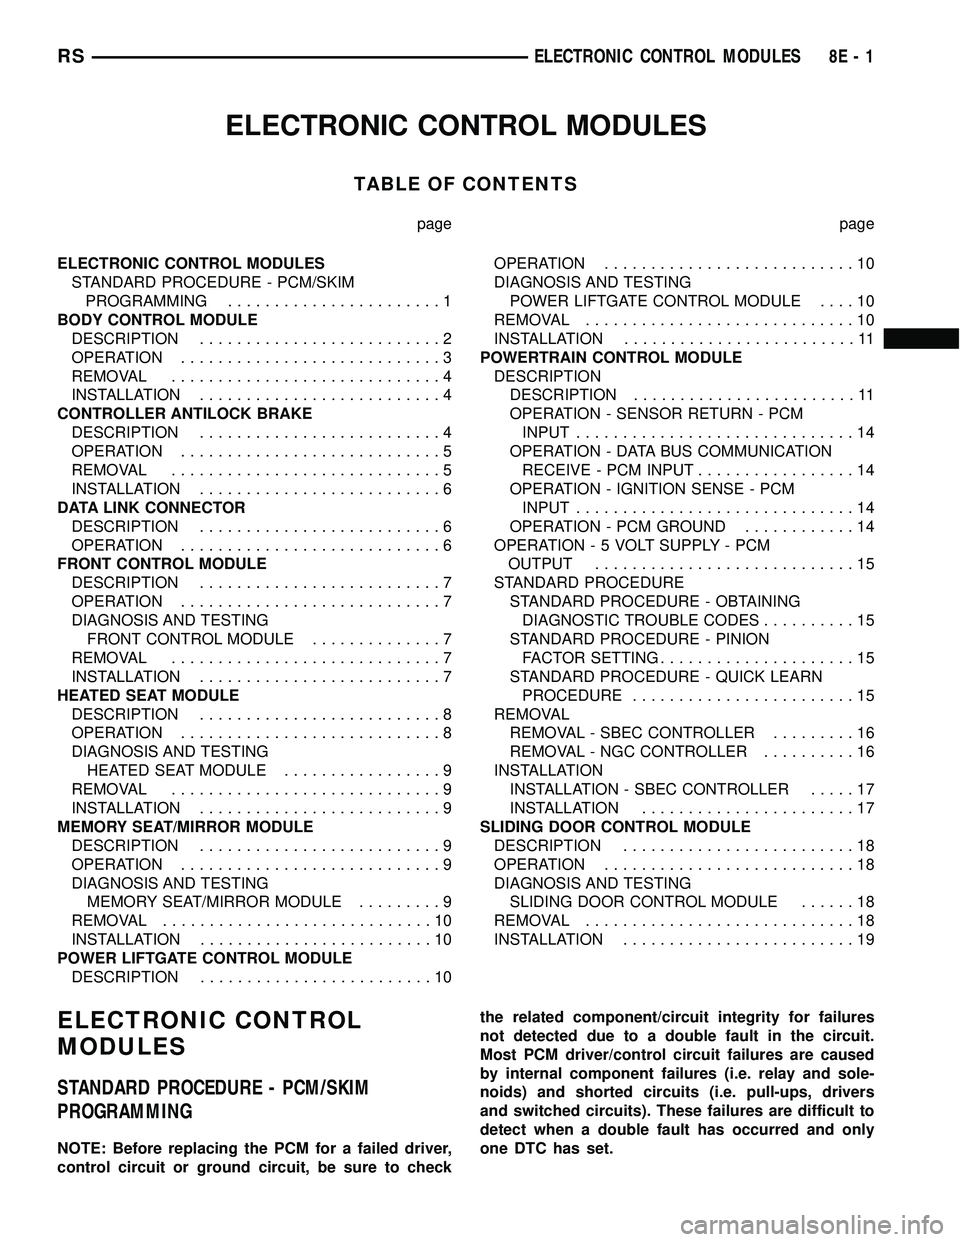 CHRYSLER CARAVAN 2005  Service Manual ELECTRONIC CONTROL MODULES
TABLE OF CONTENTS
page page
ELECTRONIC CONTROL MODULES
STANDARD PROCEDURE - PCM/SKIM
PROGRAMMING.......................1
BODY CONTROL MODULE
DESCRIPTION.....................